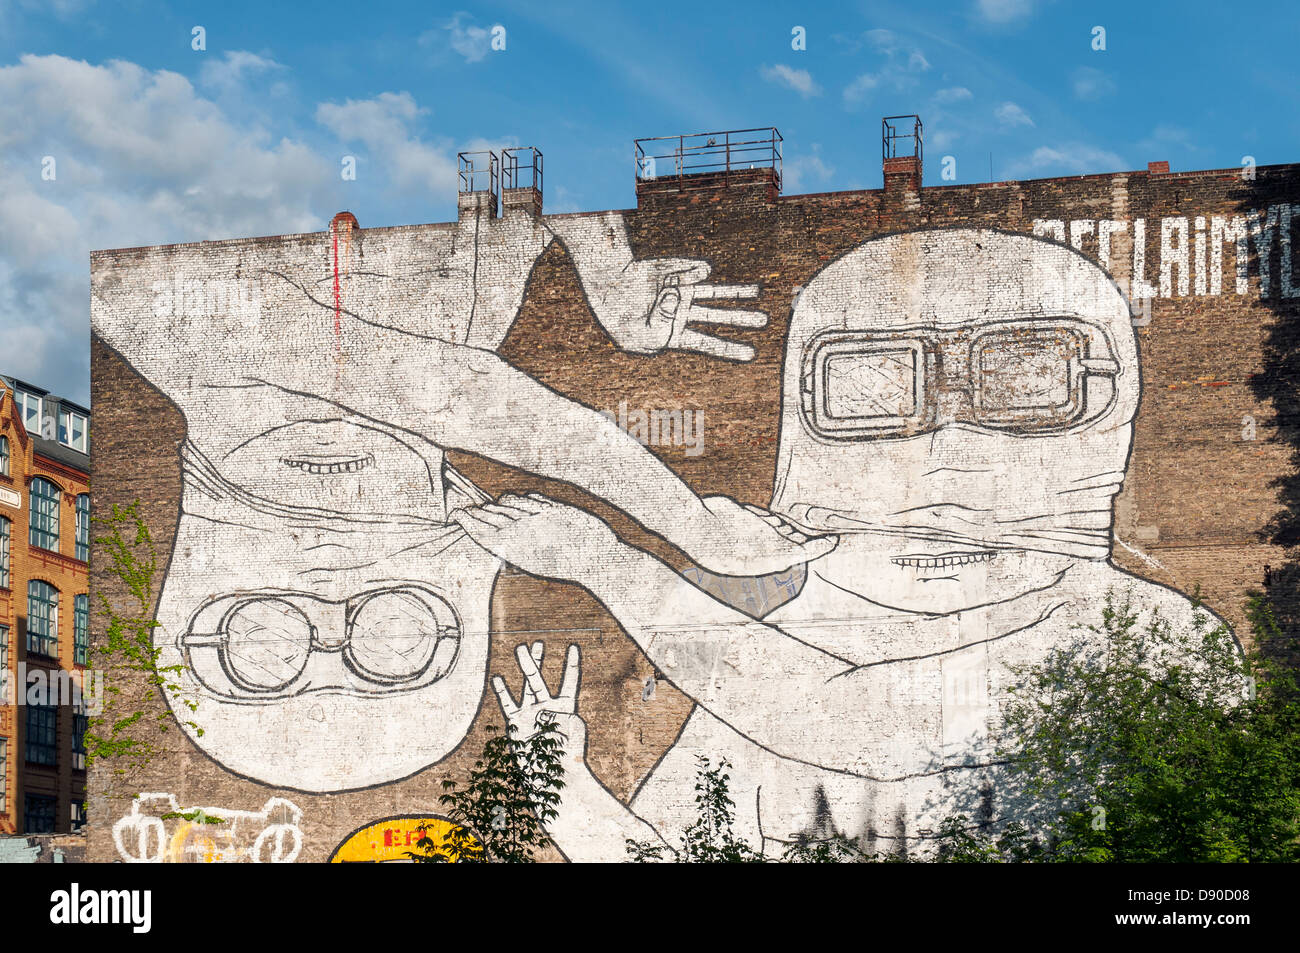 Brothers Wall Painting by artist Blu, Kreuzberg Street Art, Berlin, Germany Stock Photo